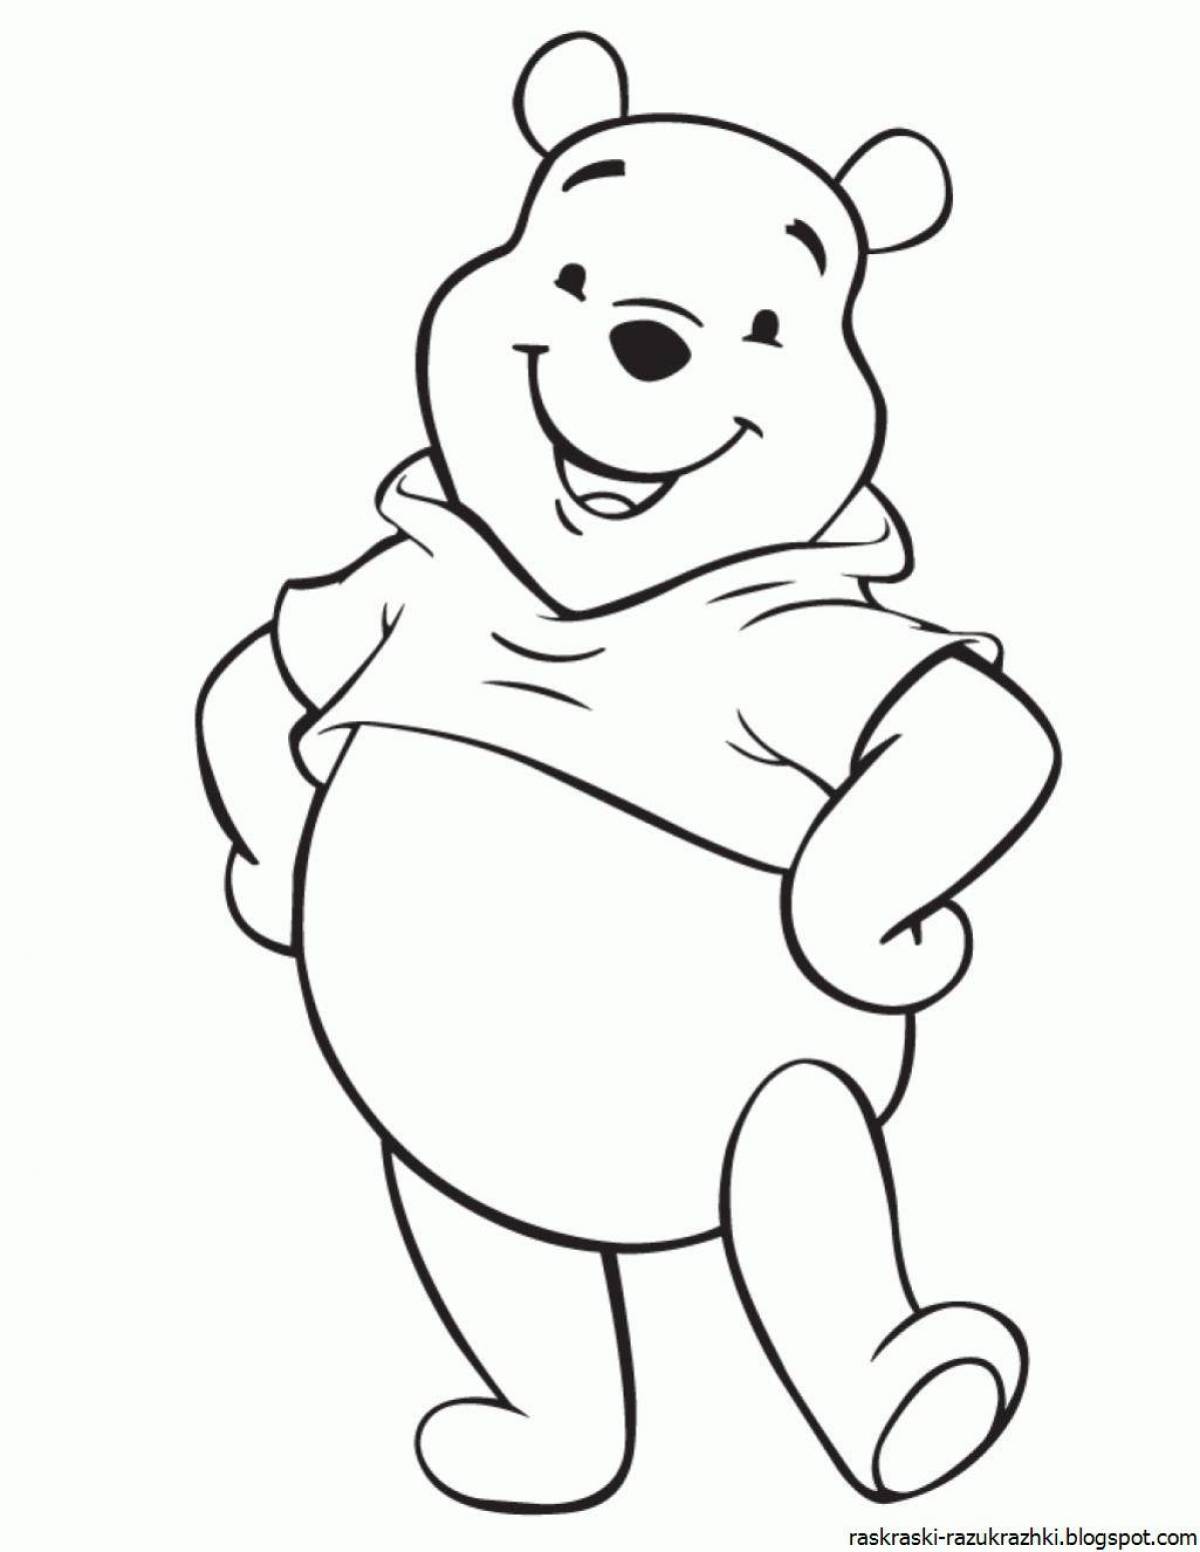 Winnie the pooh glitter coloring book